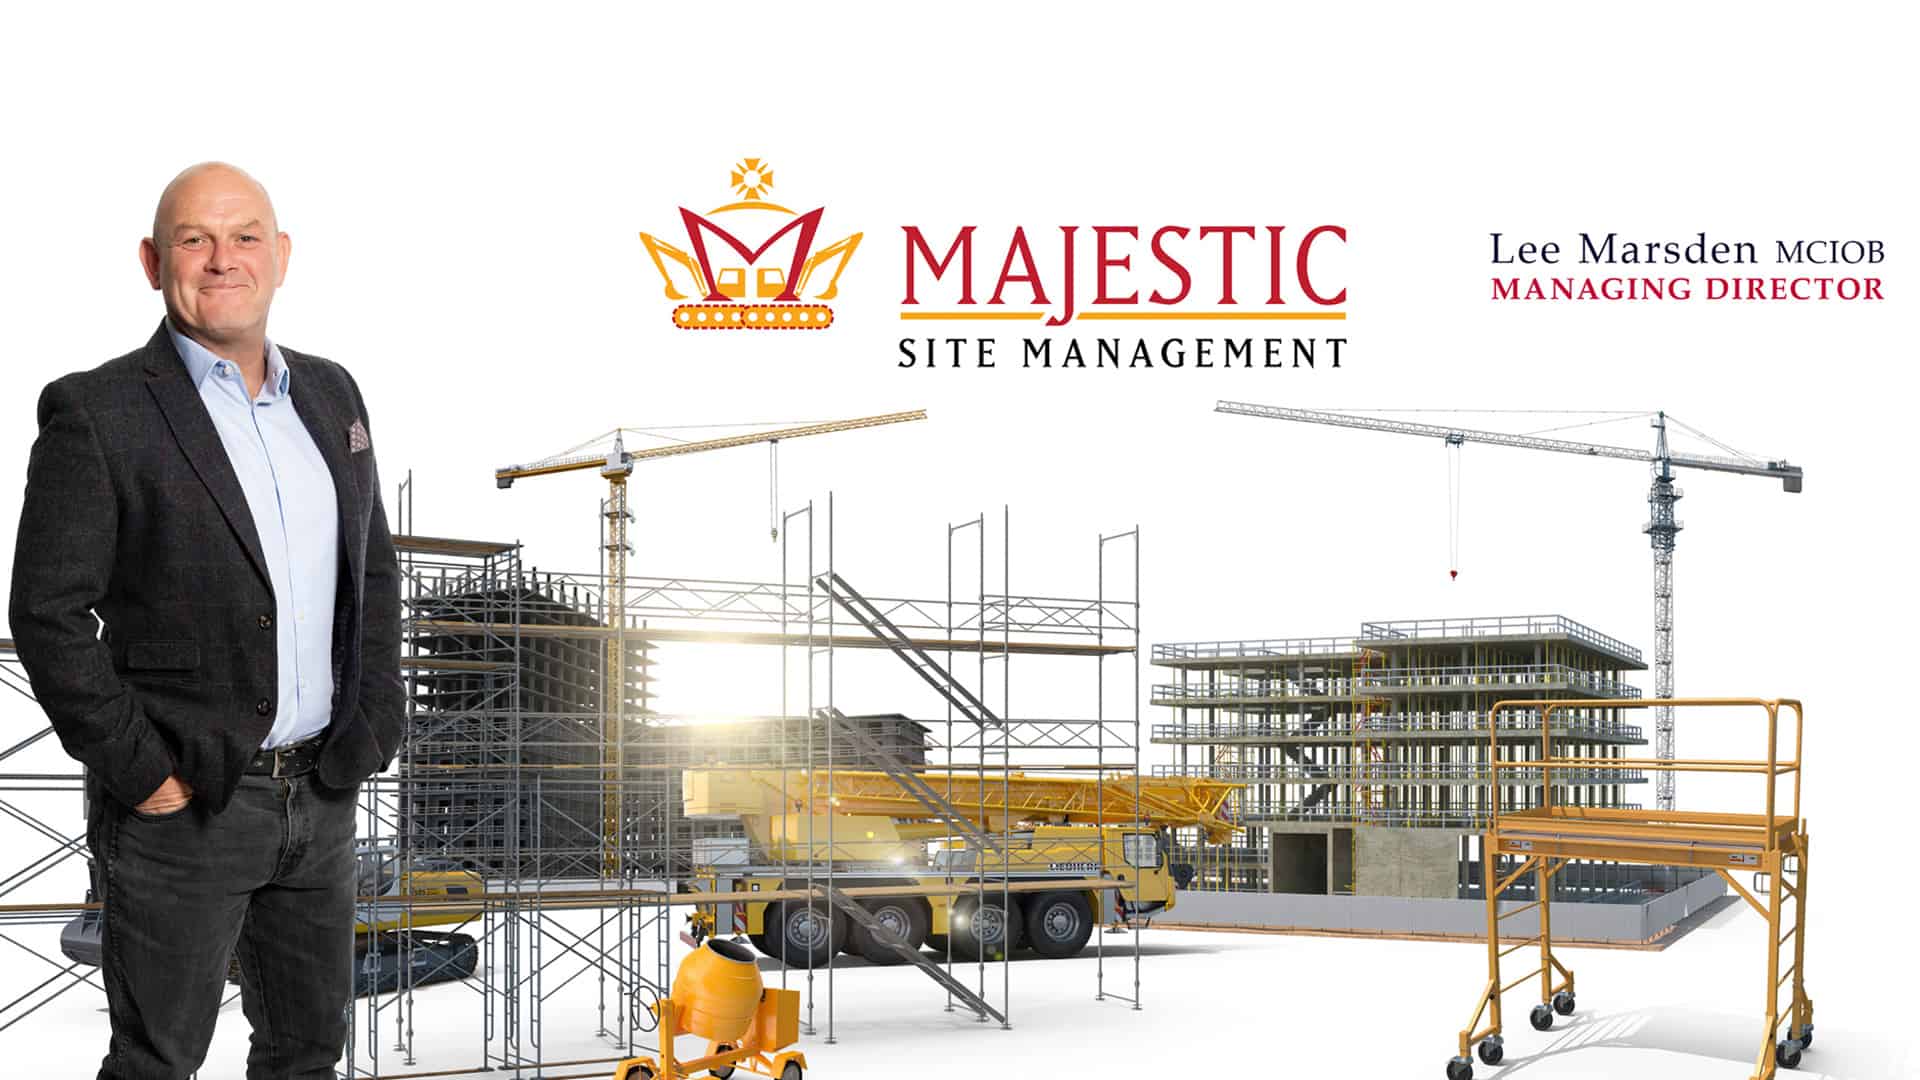 Majestic Site Management website image 2